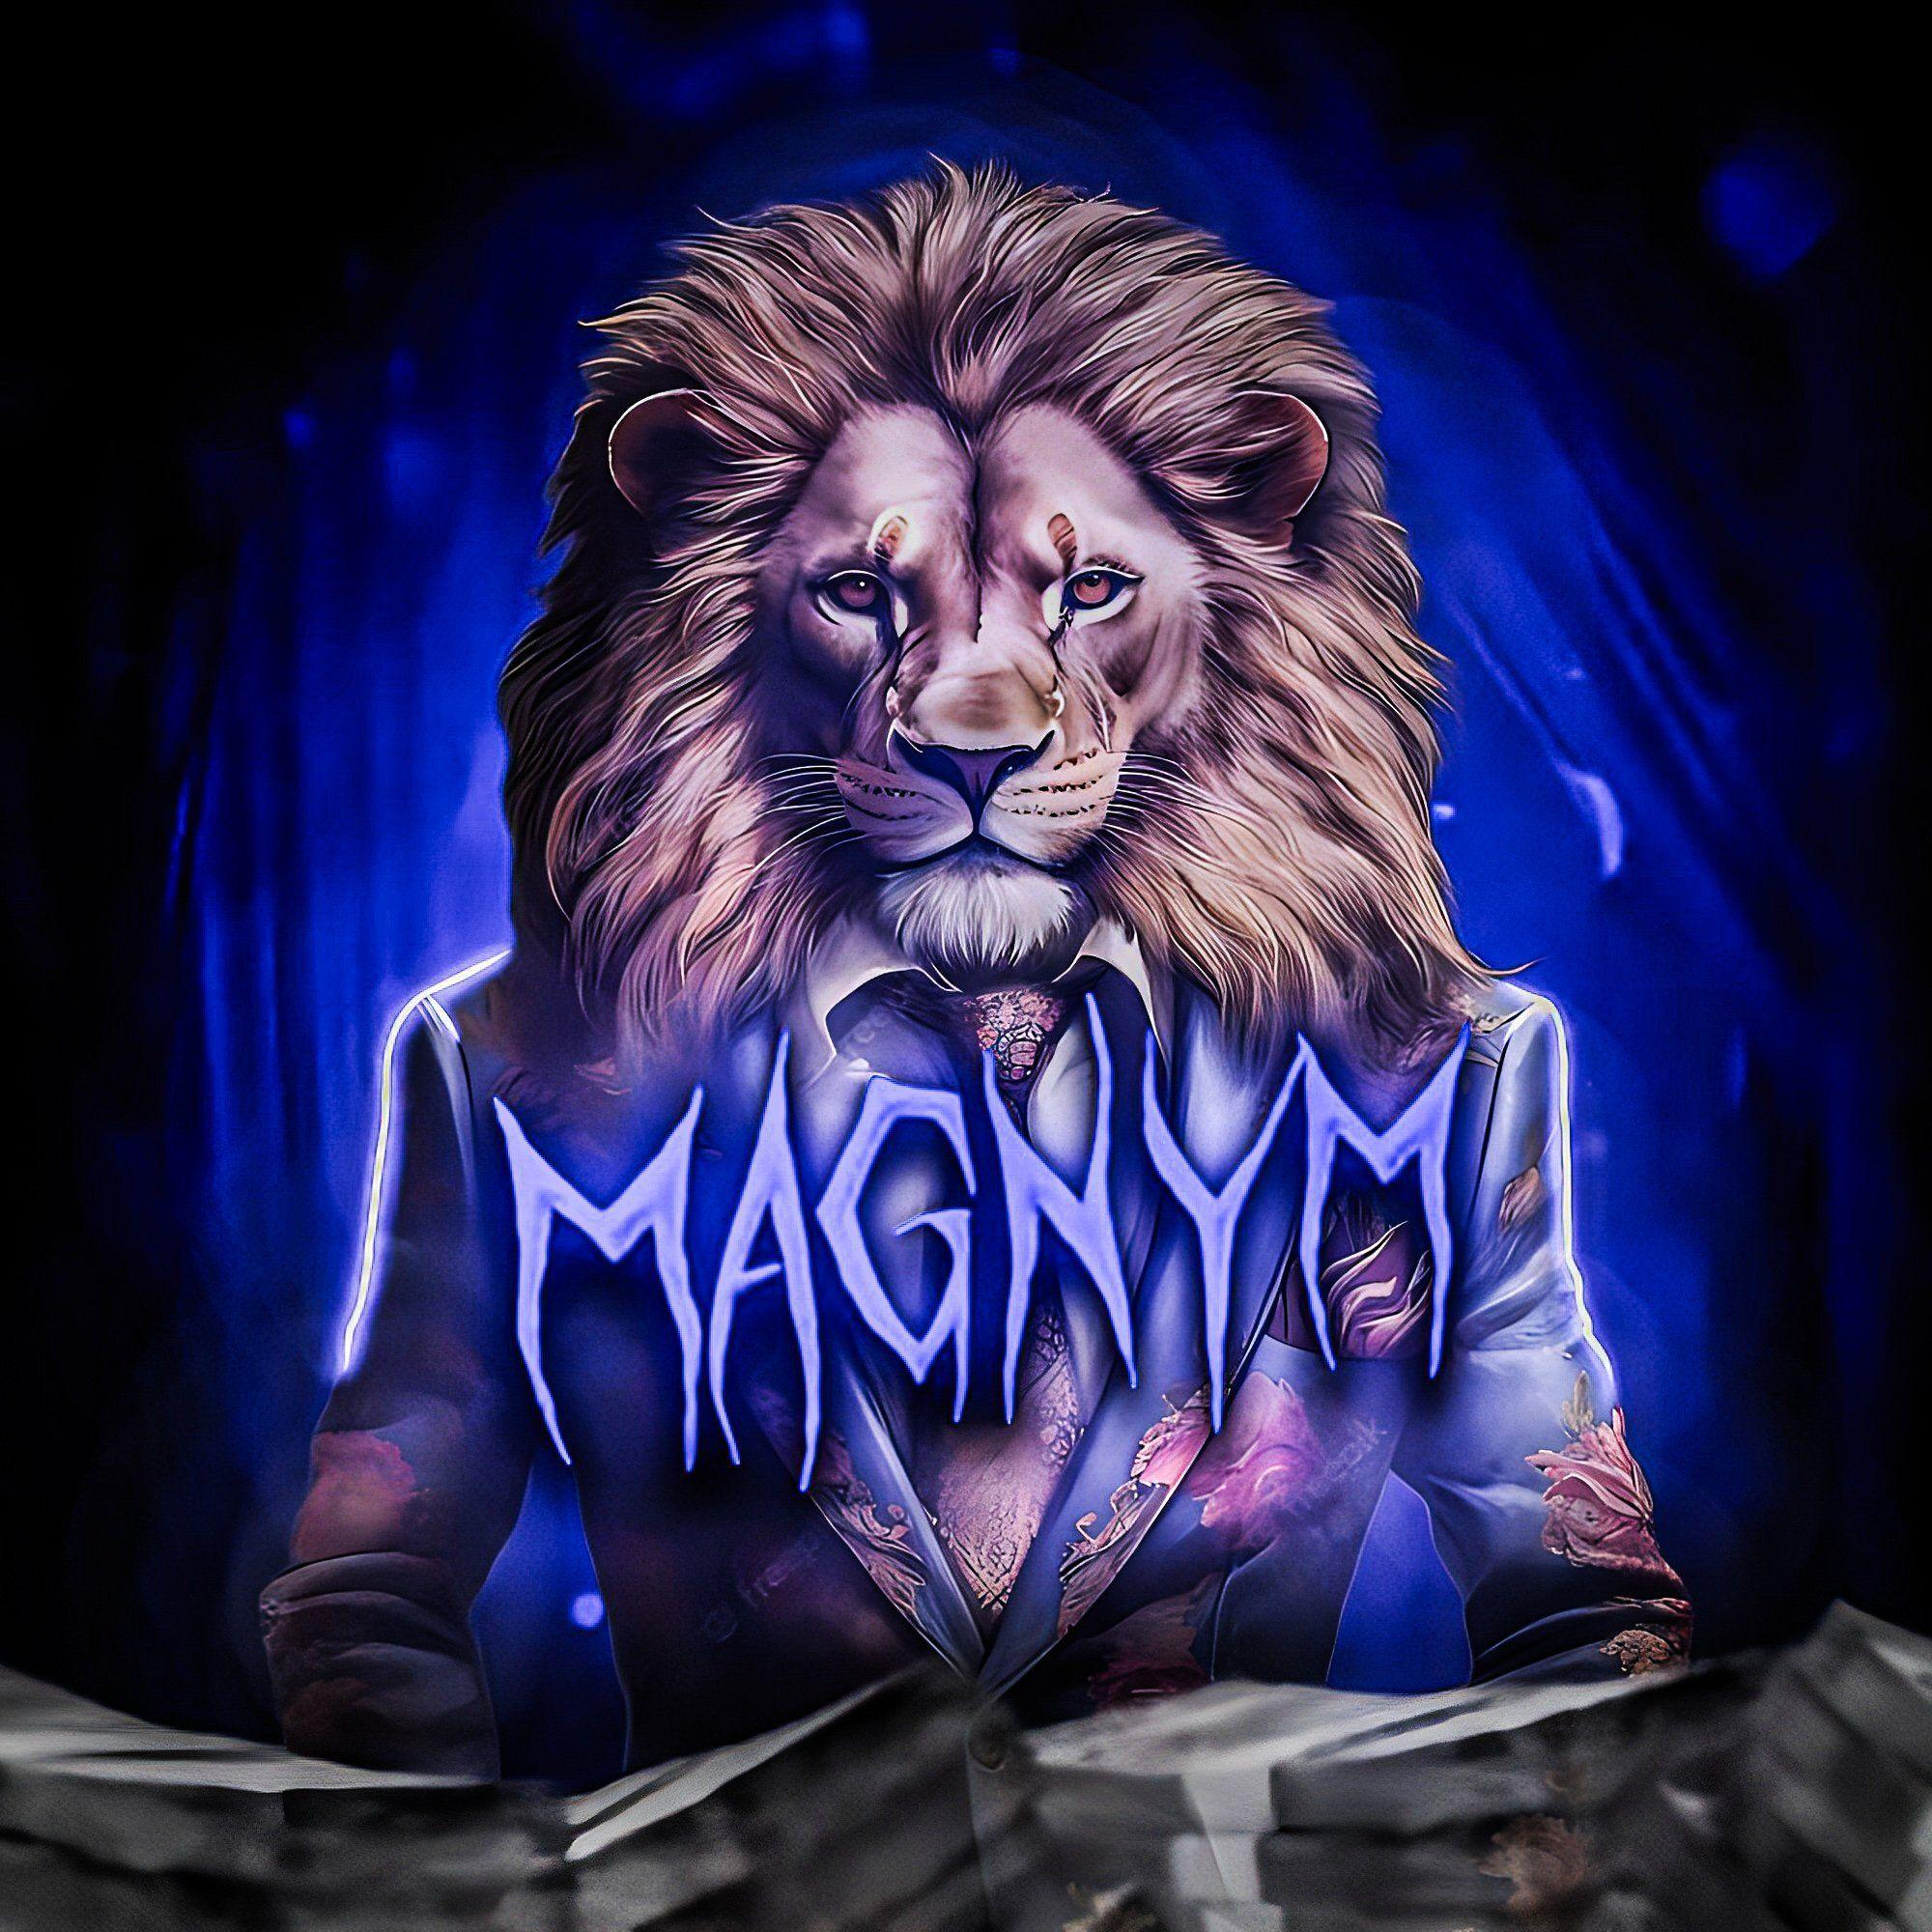 Player Mag-nym avatar